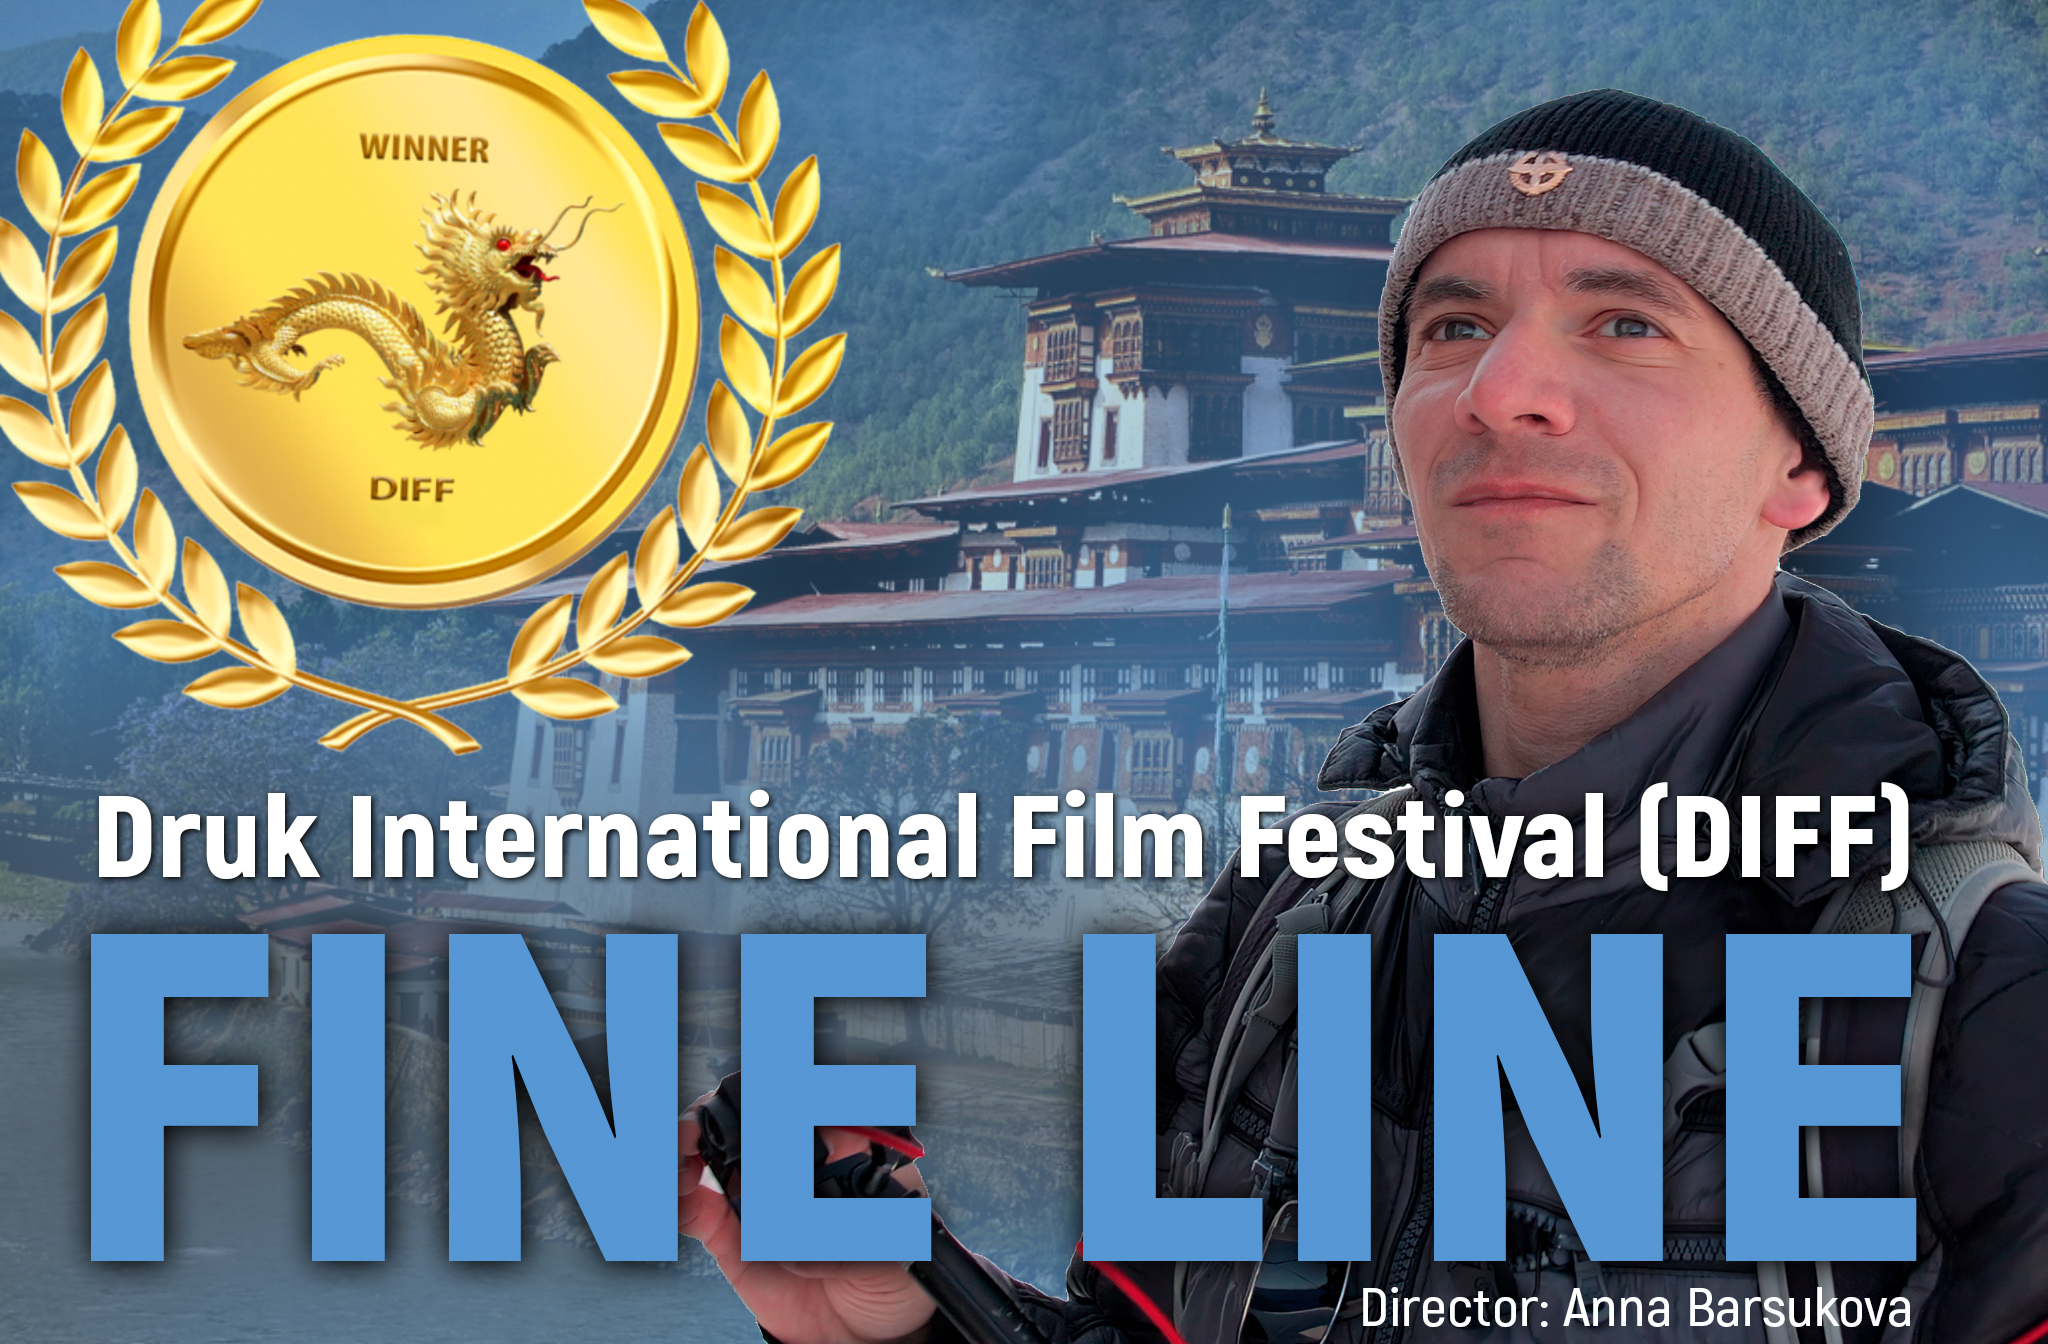 In advance of screening her documentary Fine Line in Bhutan as Druk International Film Festival's pre-selected winner, film director Anna Barsukova gave an interview to local media journalist Loknat Karma. 